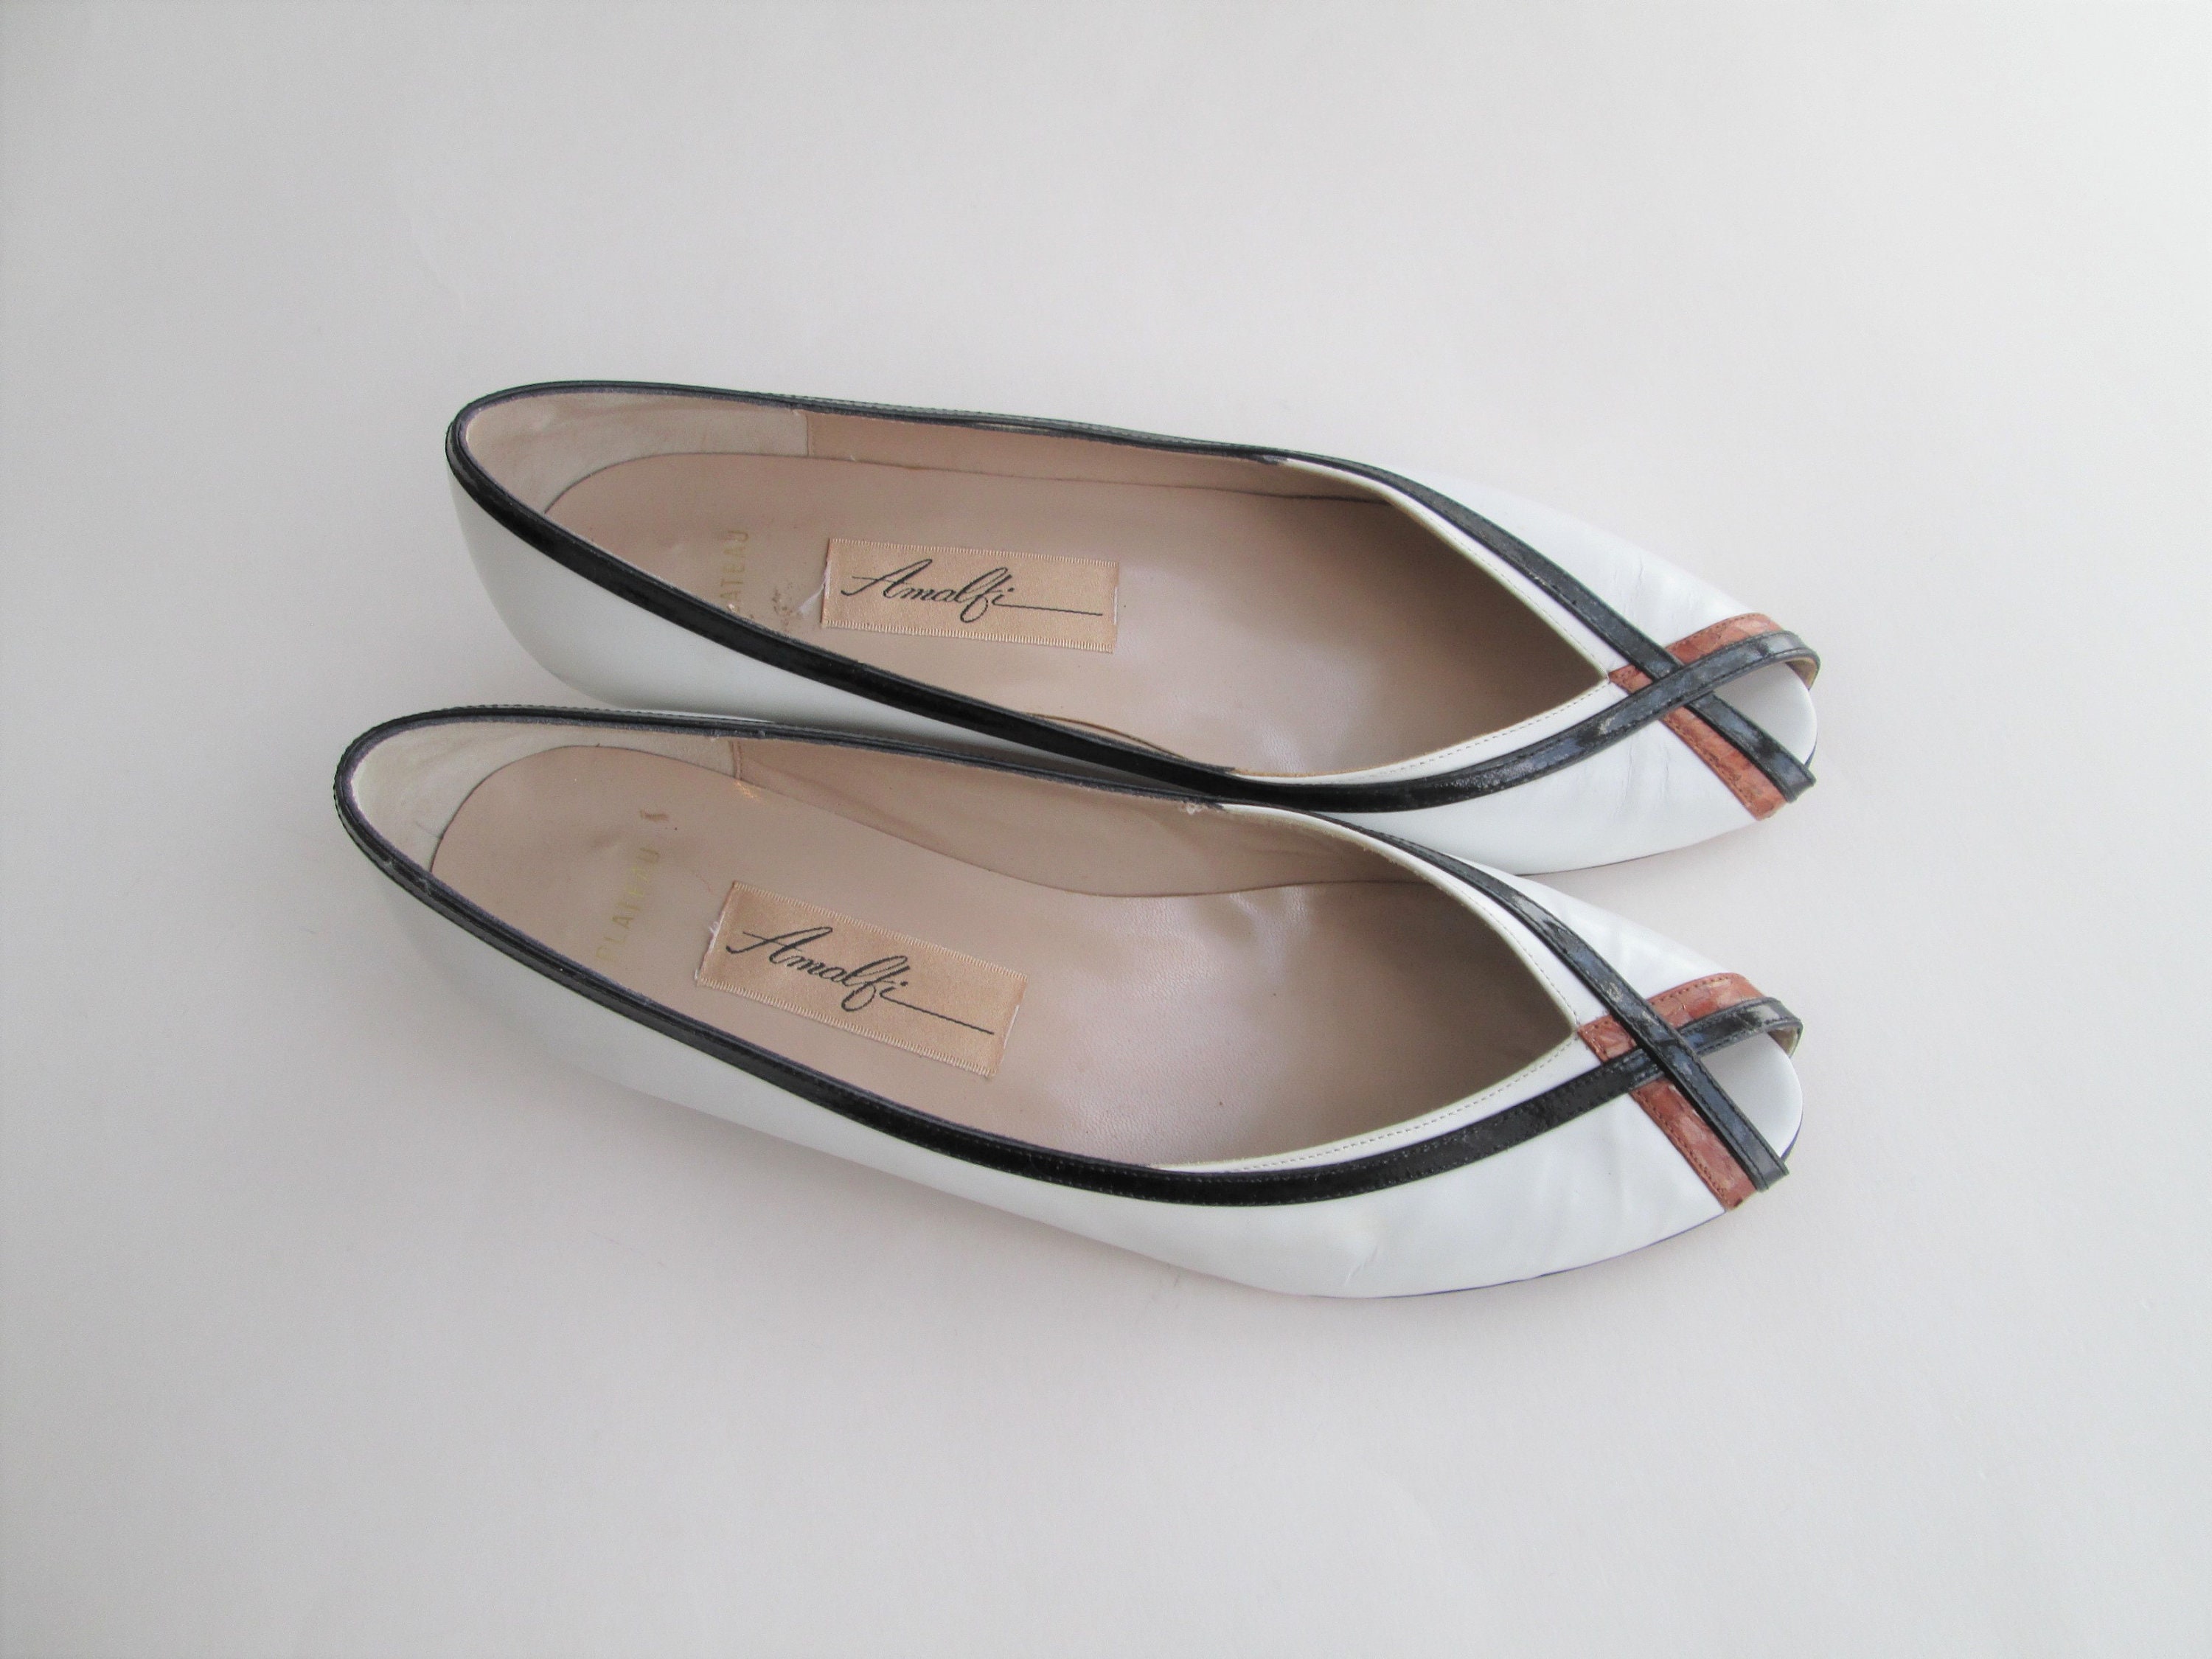 Vintage 1980s Italian Leather Shoes Flats Peeptoe White Black | Etsy